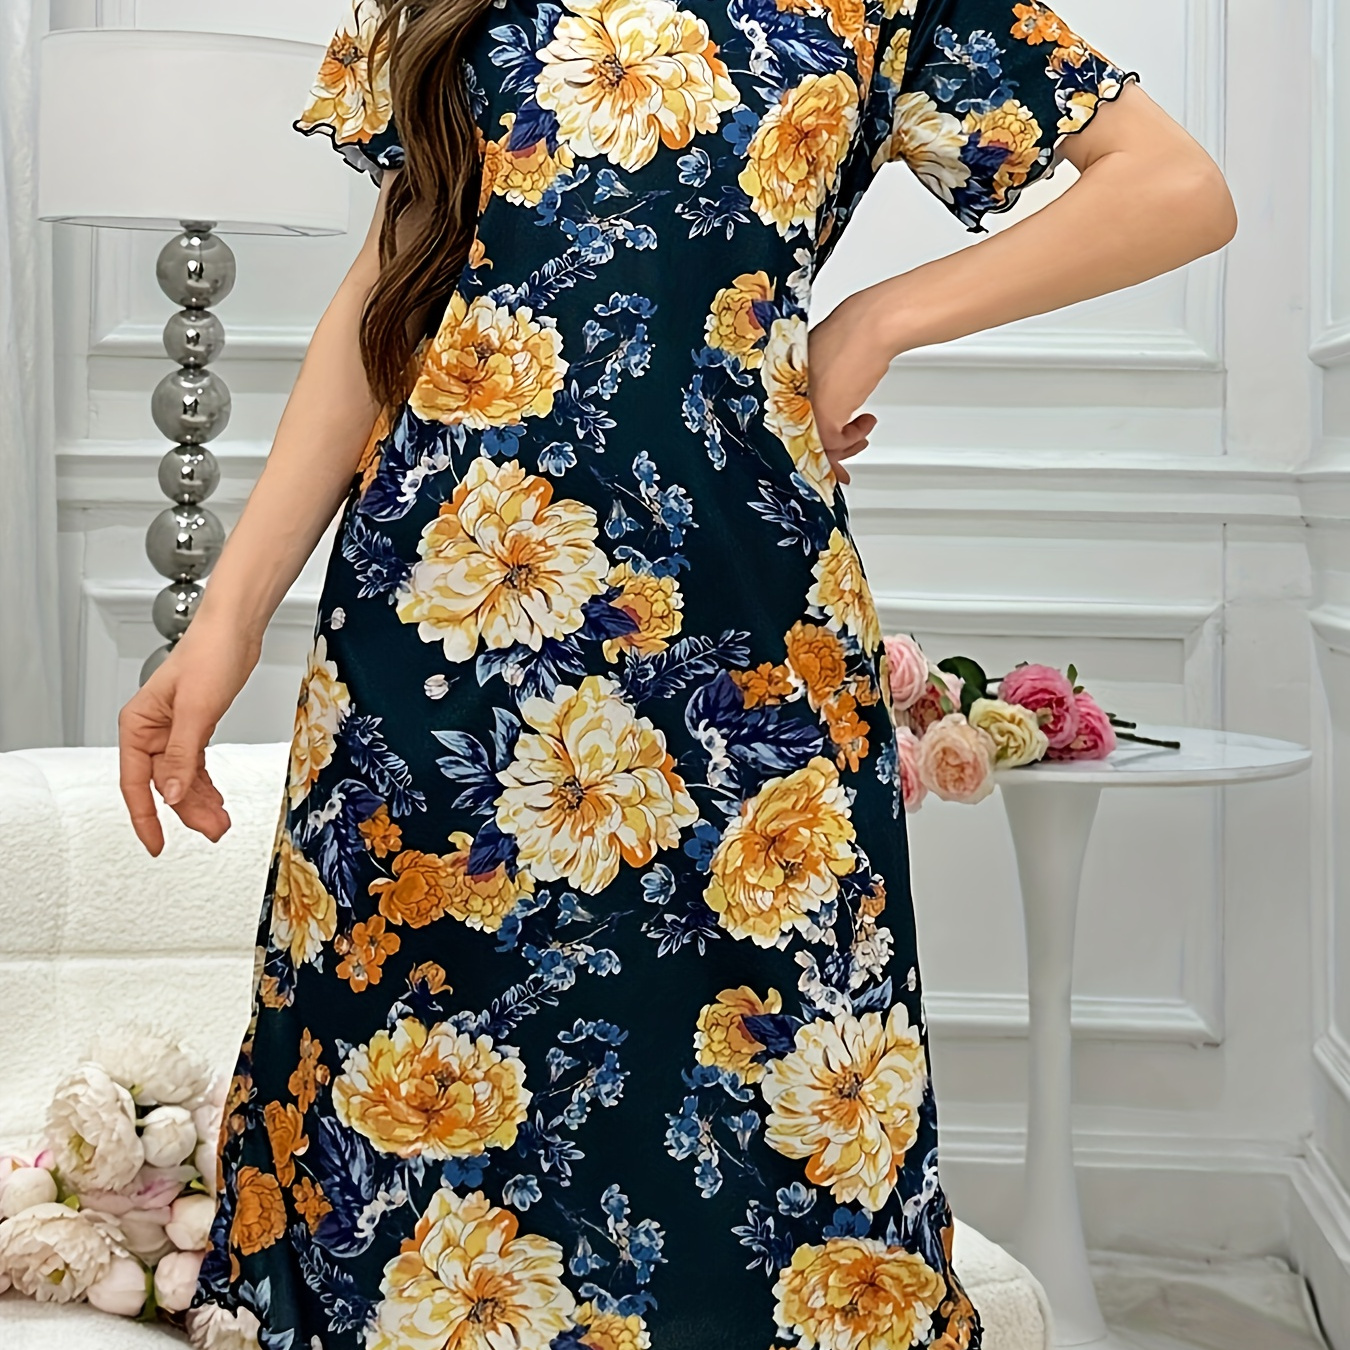 

Floral Print Frill Trim Nightgown, Elegant Short Sleeve Round Neck Loose Fit Dress, Women's Sleepwear